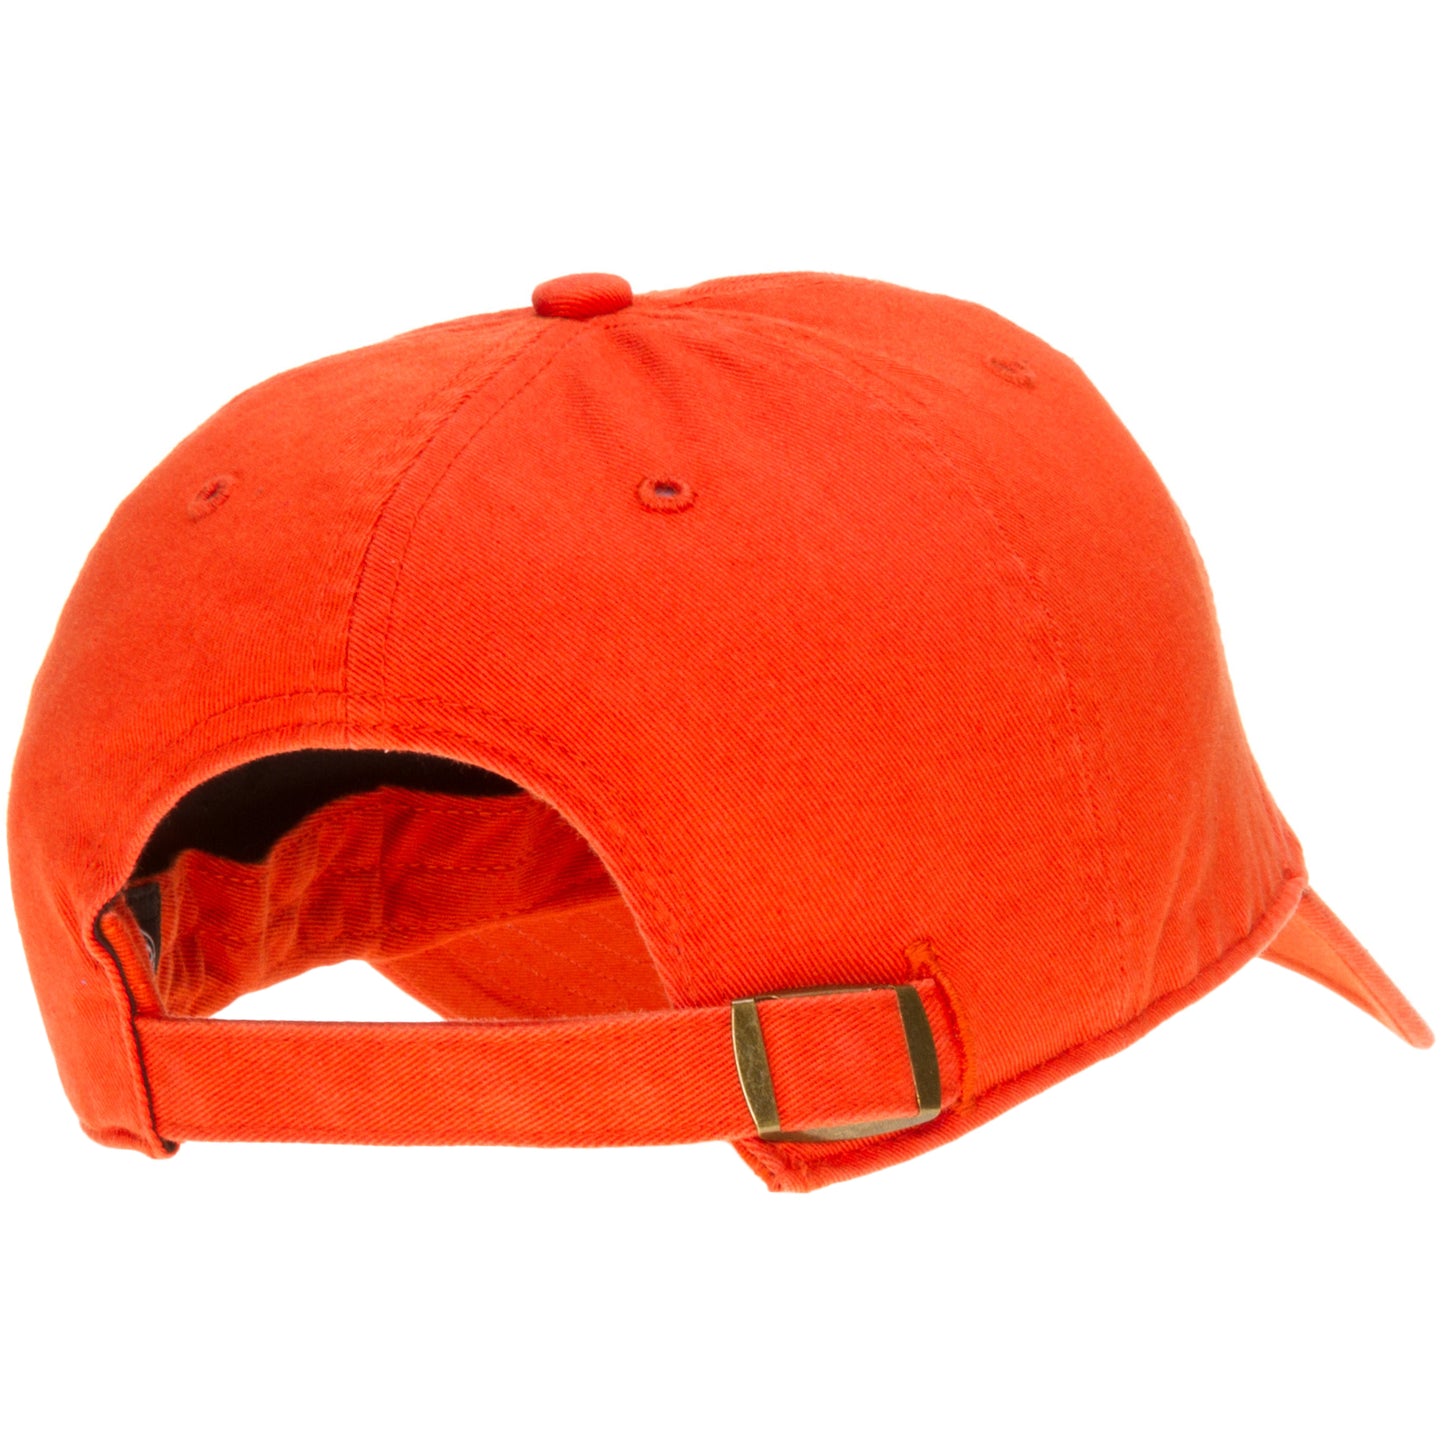 Chicago Bears Orange Adjustable Hat with Script B Logo